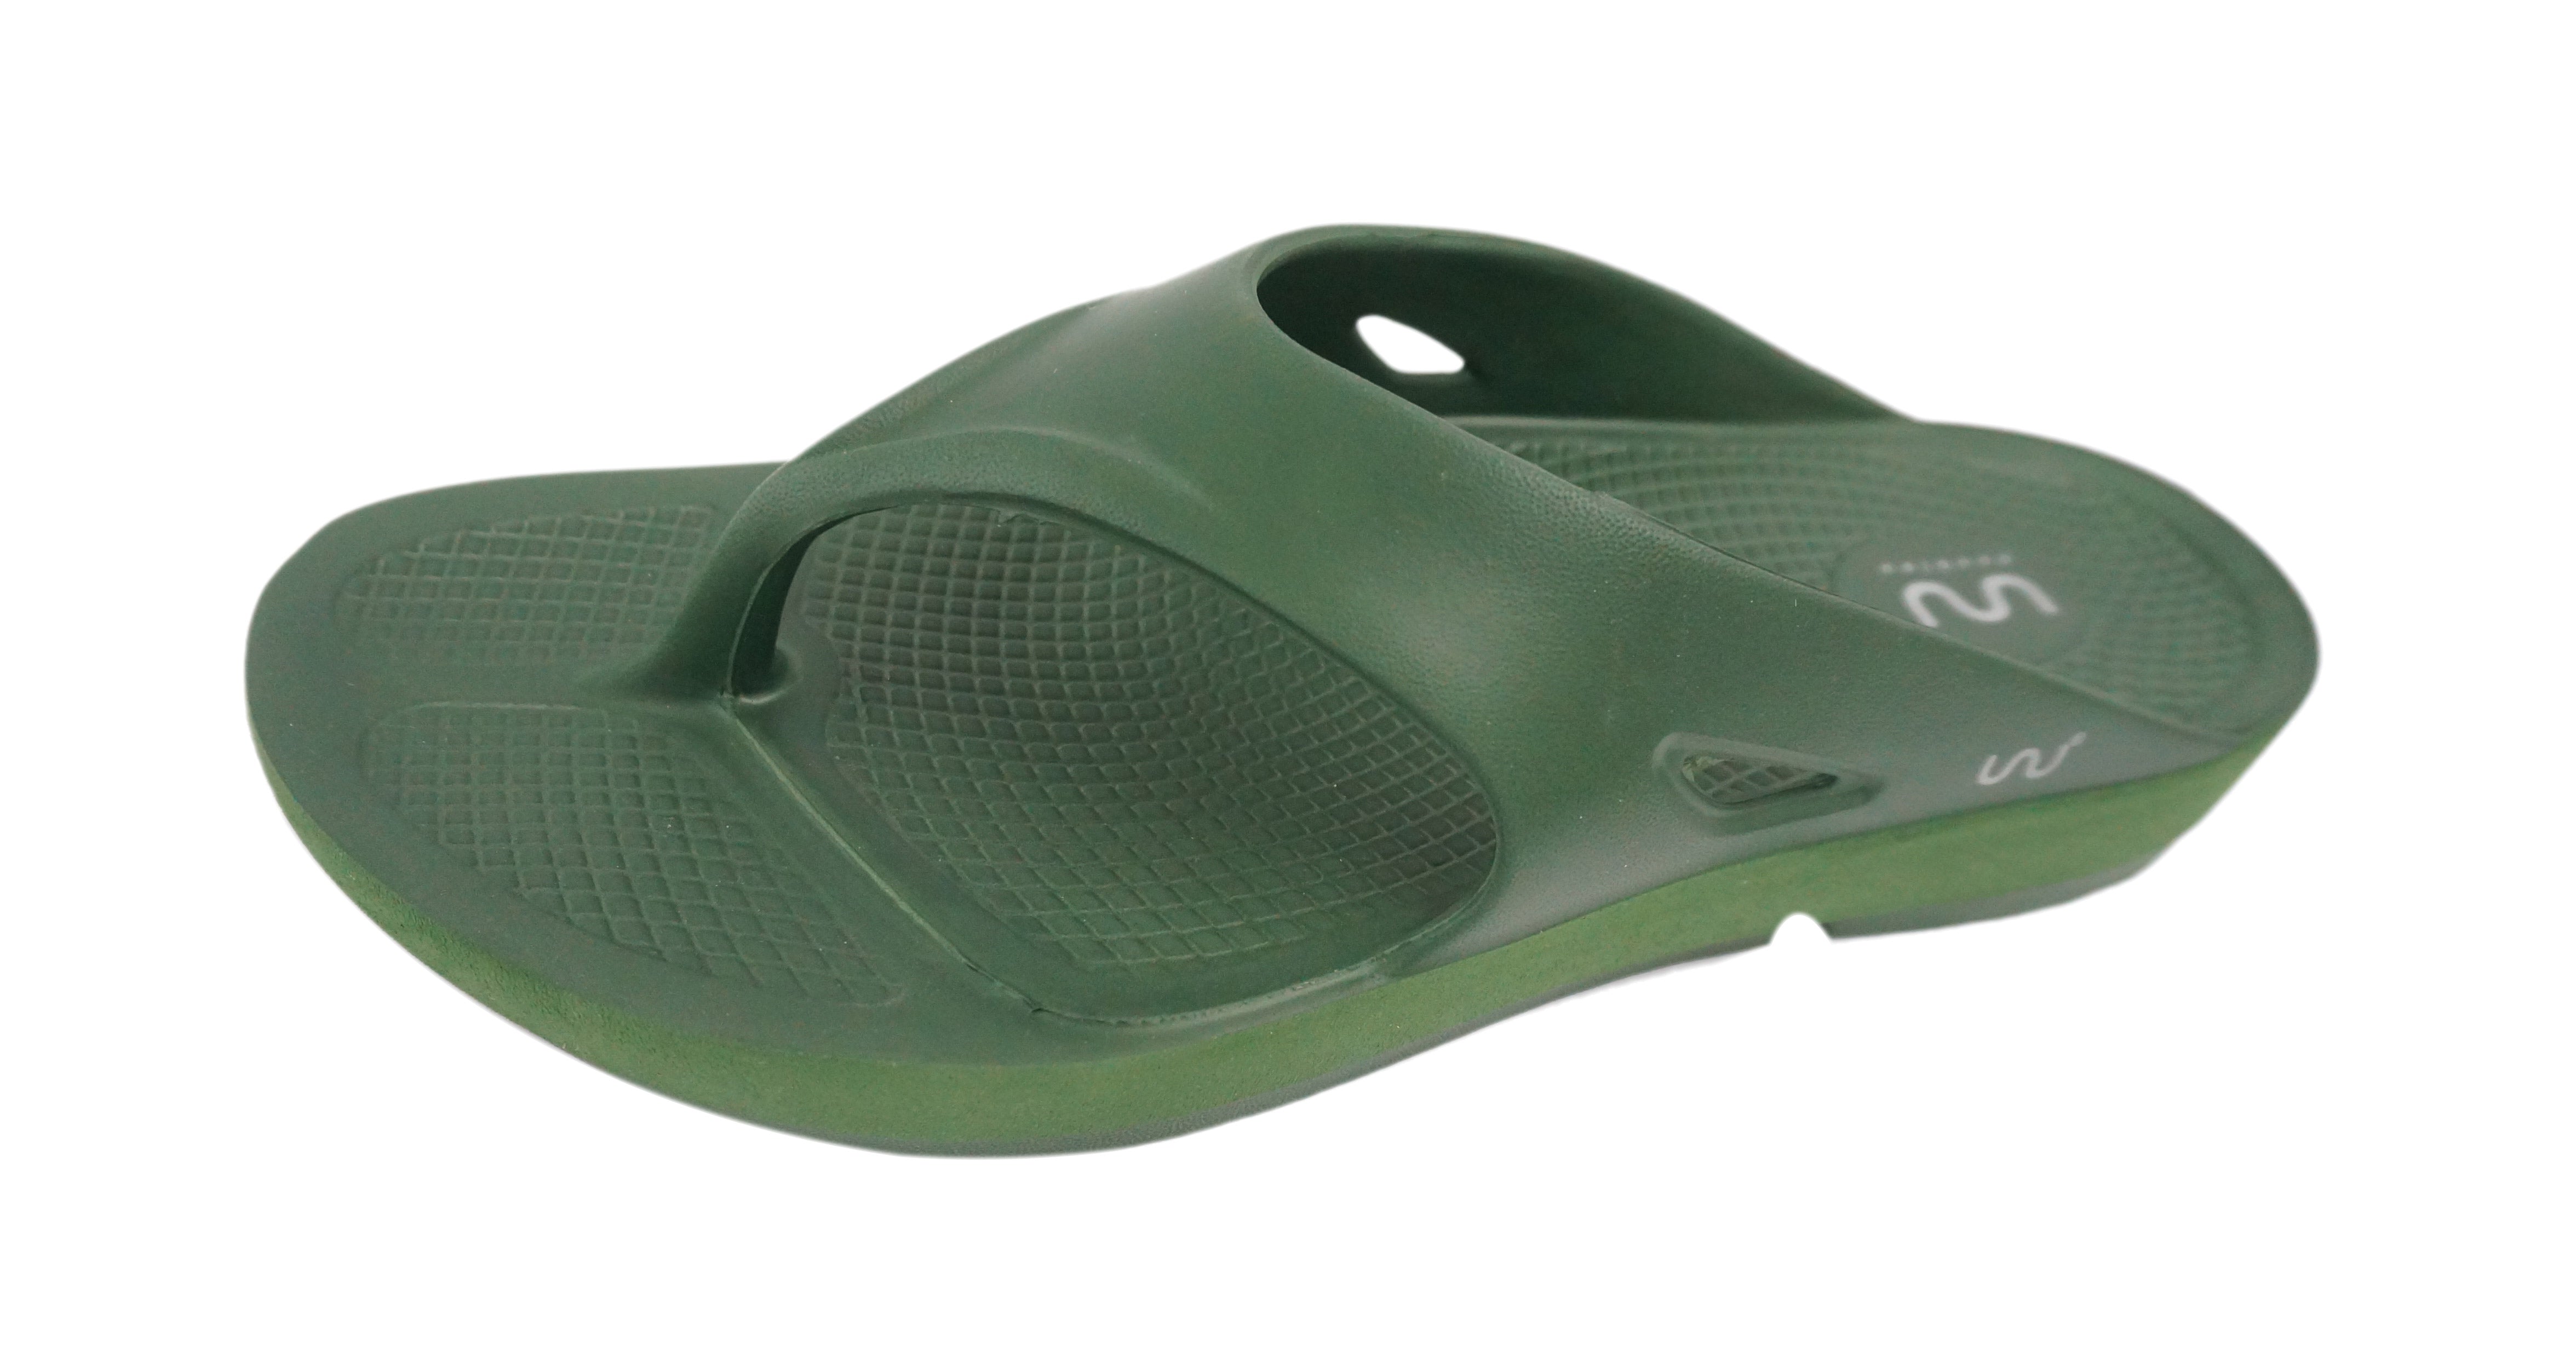 Doubleu Comfort Men Slipper Comfortable & Light Weight Recovery Footwear (Olive)